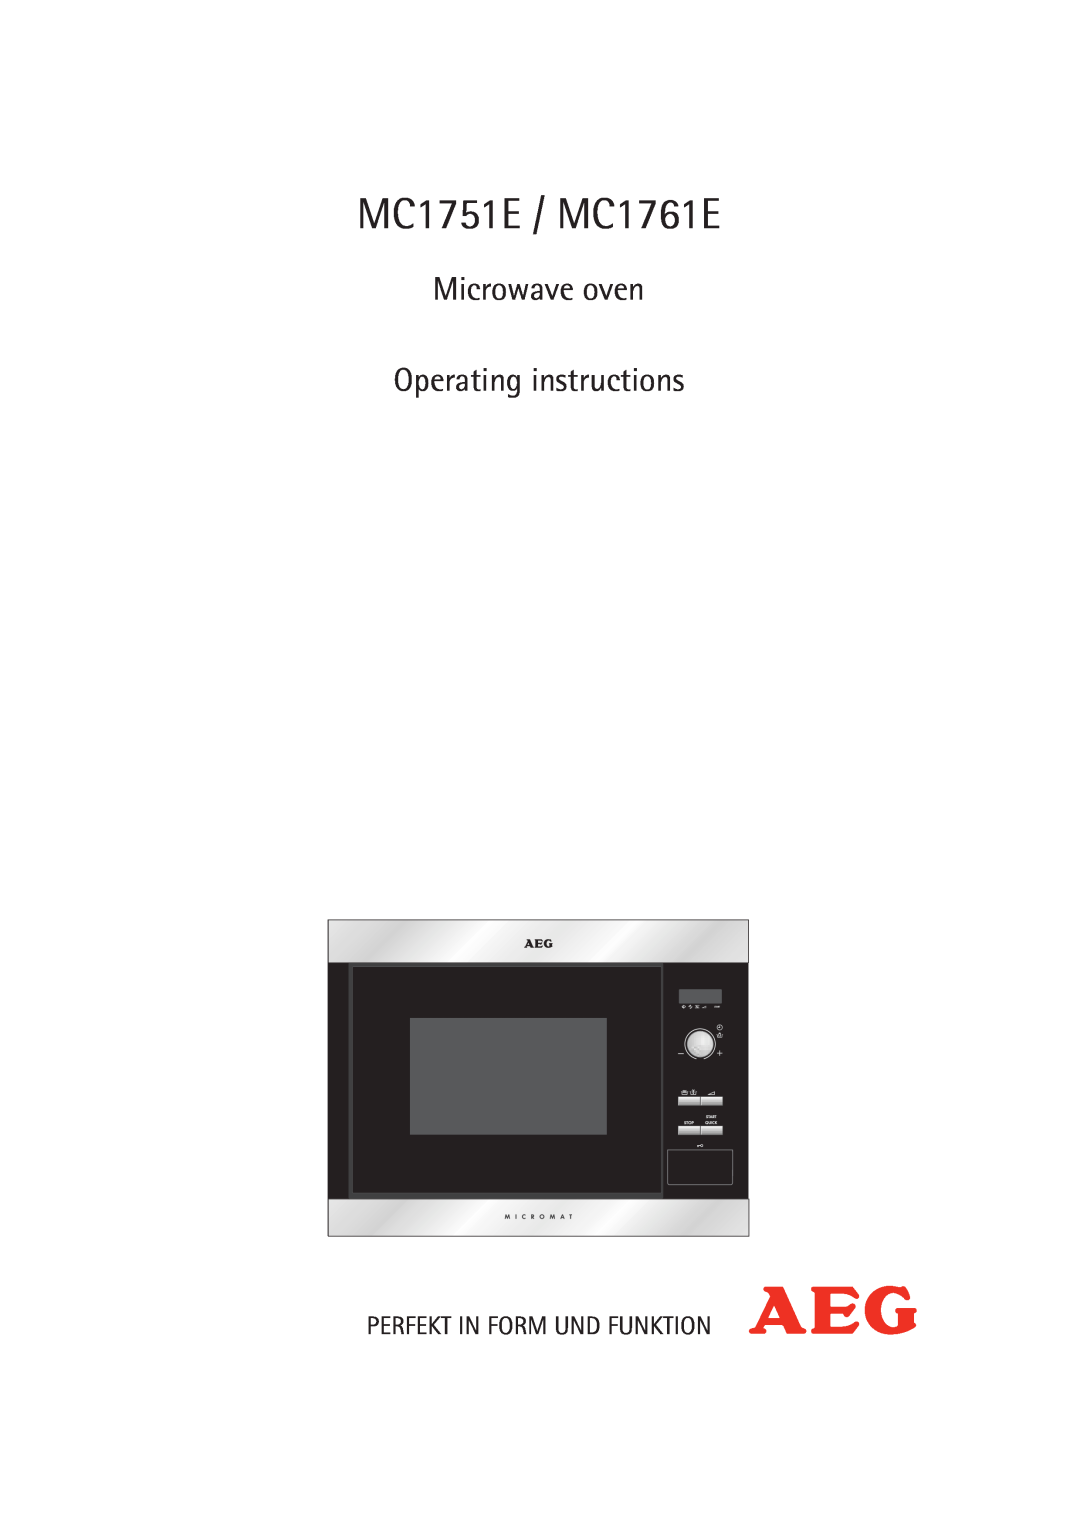 AEG operating instructions MC1751E / MC1761E, Microwave oven Operating instructions, Perfekt In Form Und Funktion 